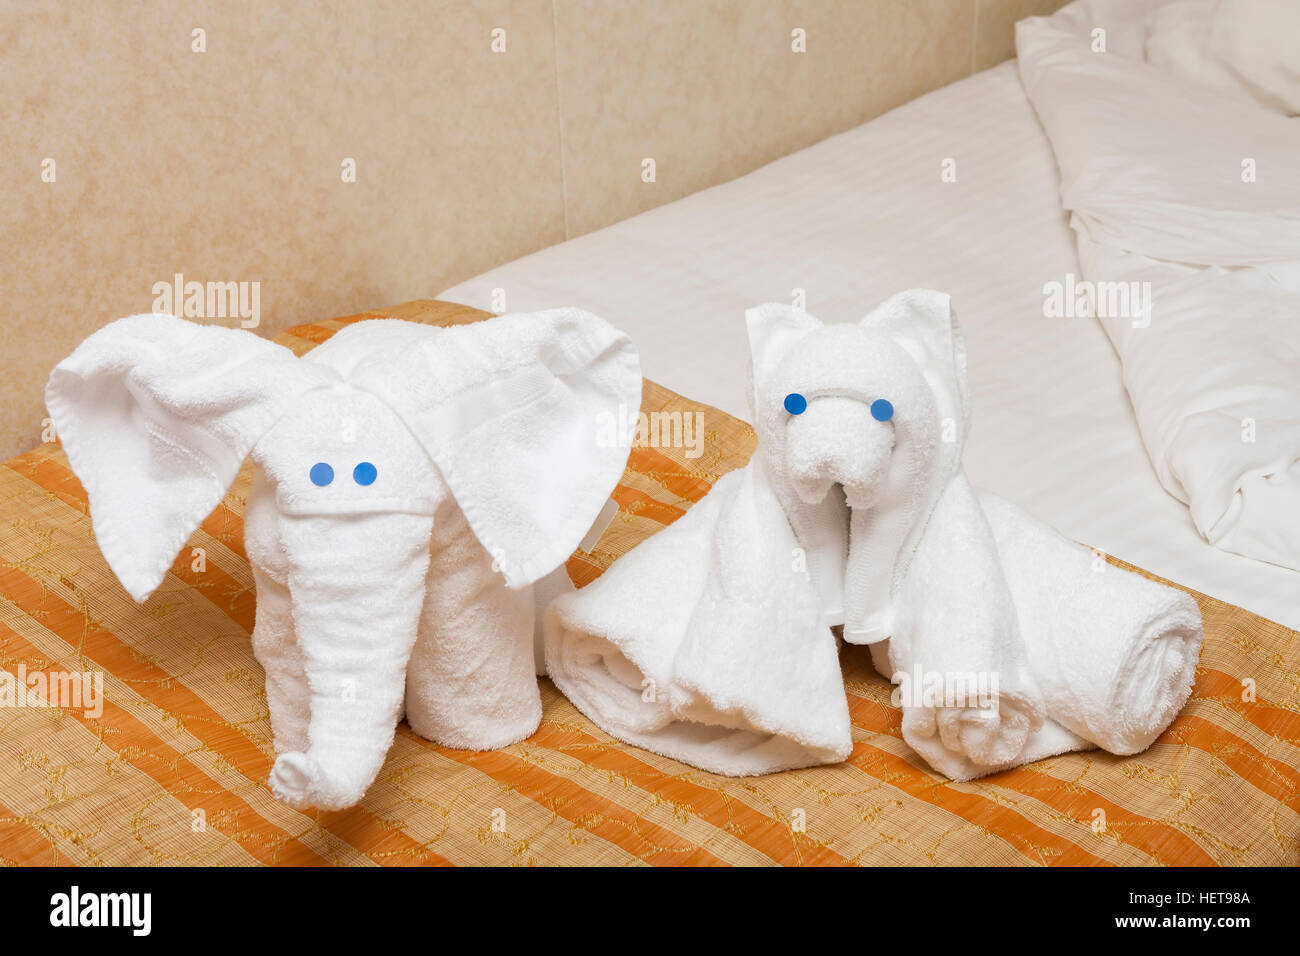 Animales de toalla fotografías e imágenes de alta resolución - Alamy